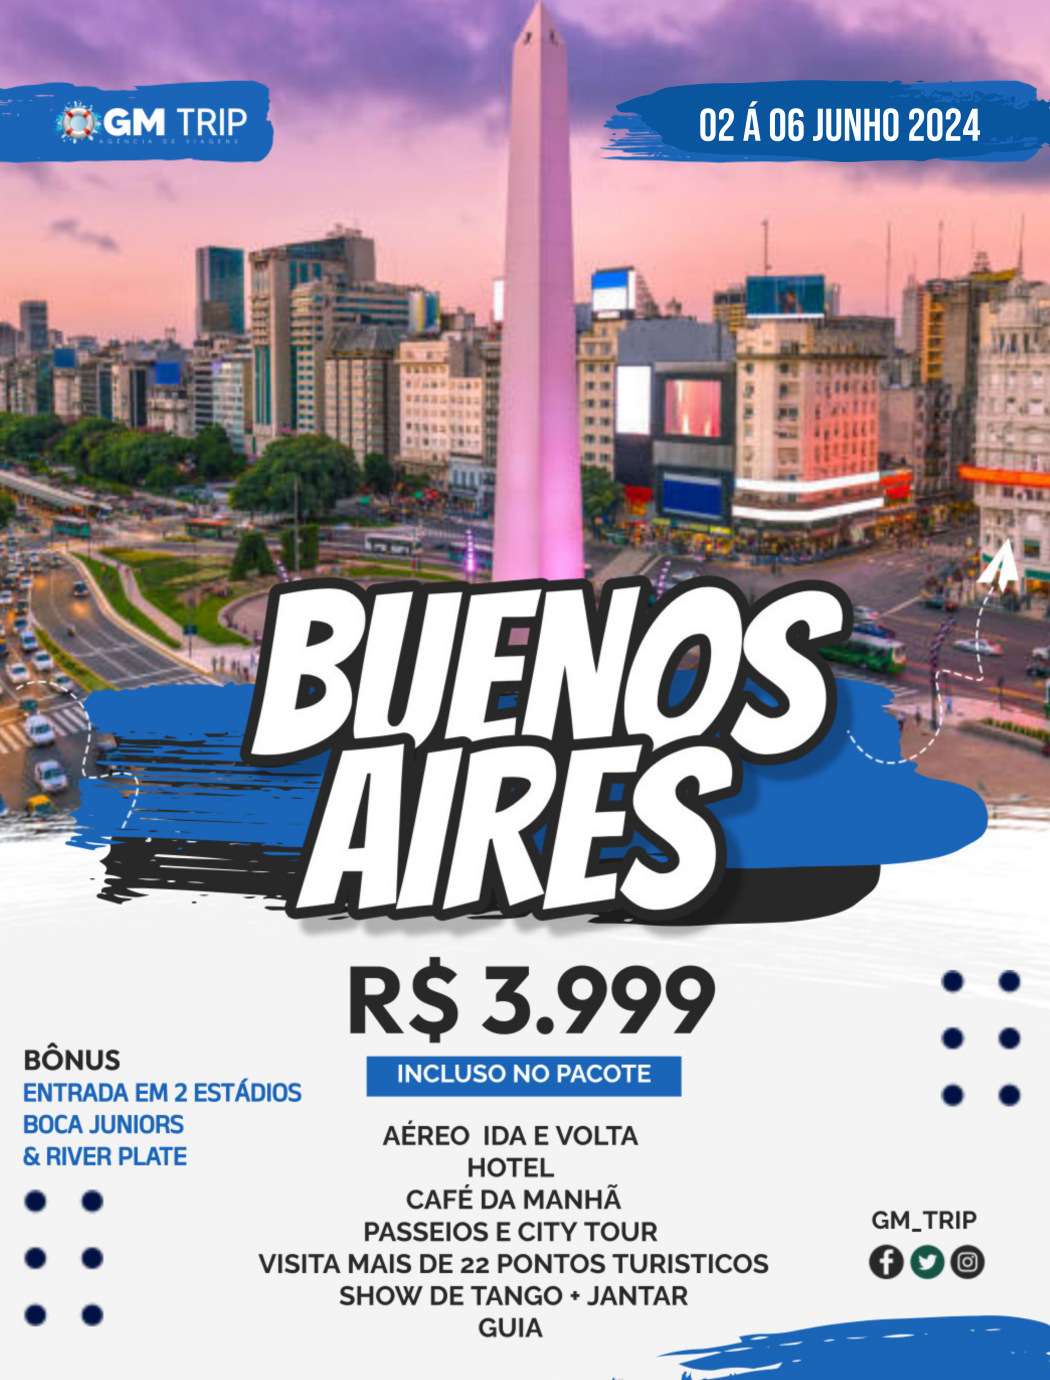 BUENOS AIRES - ARGENTINA - JUNHO 2024